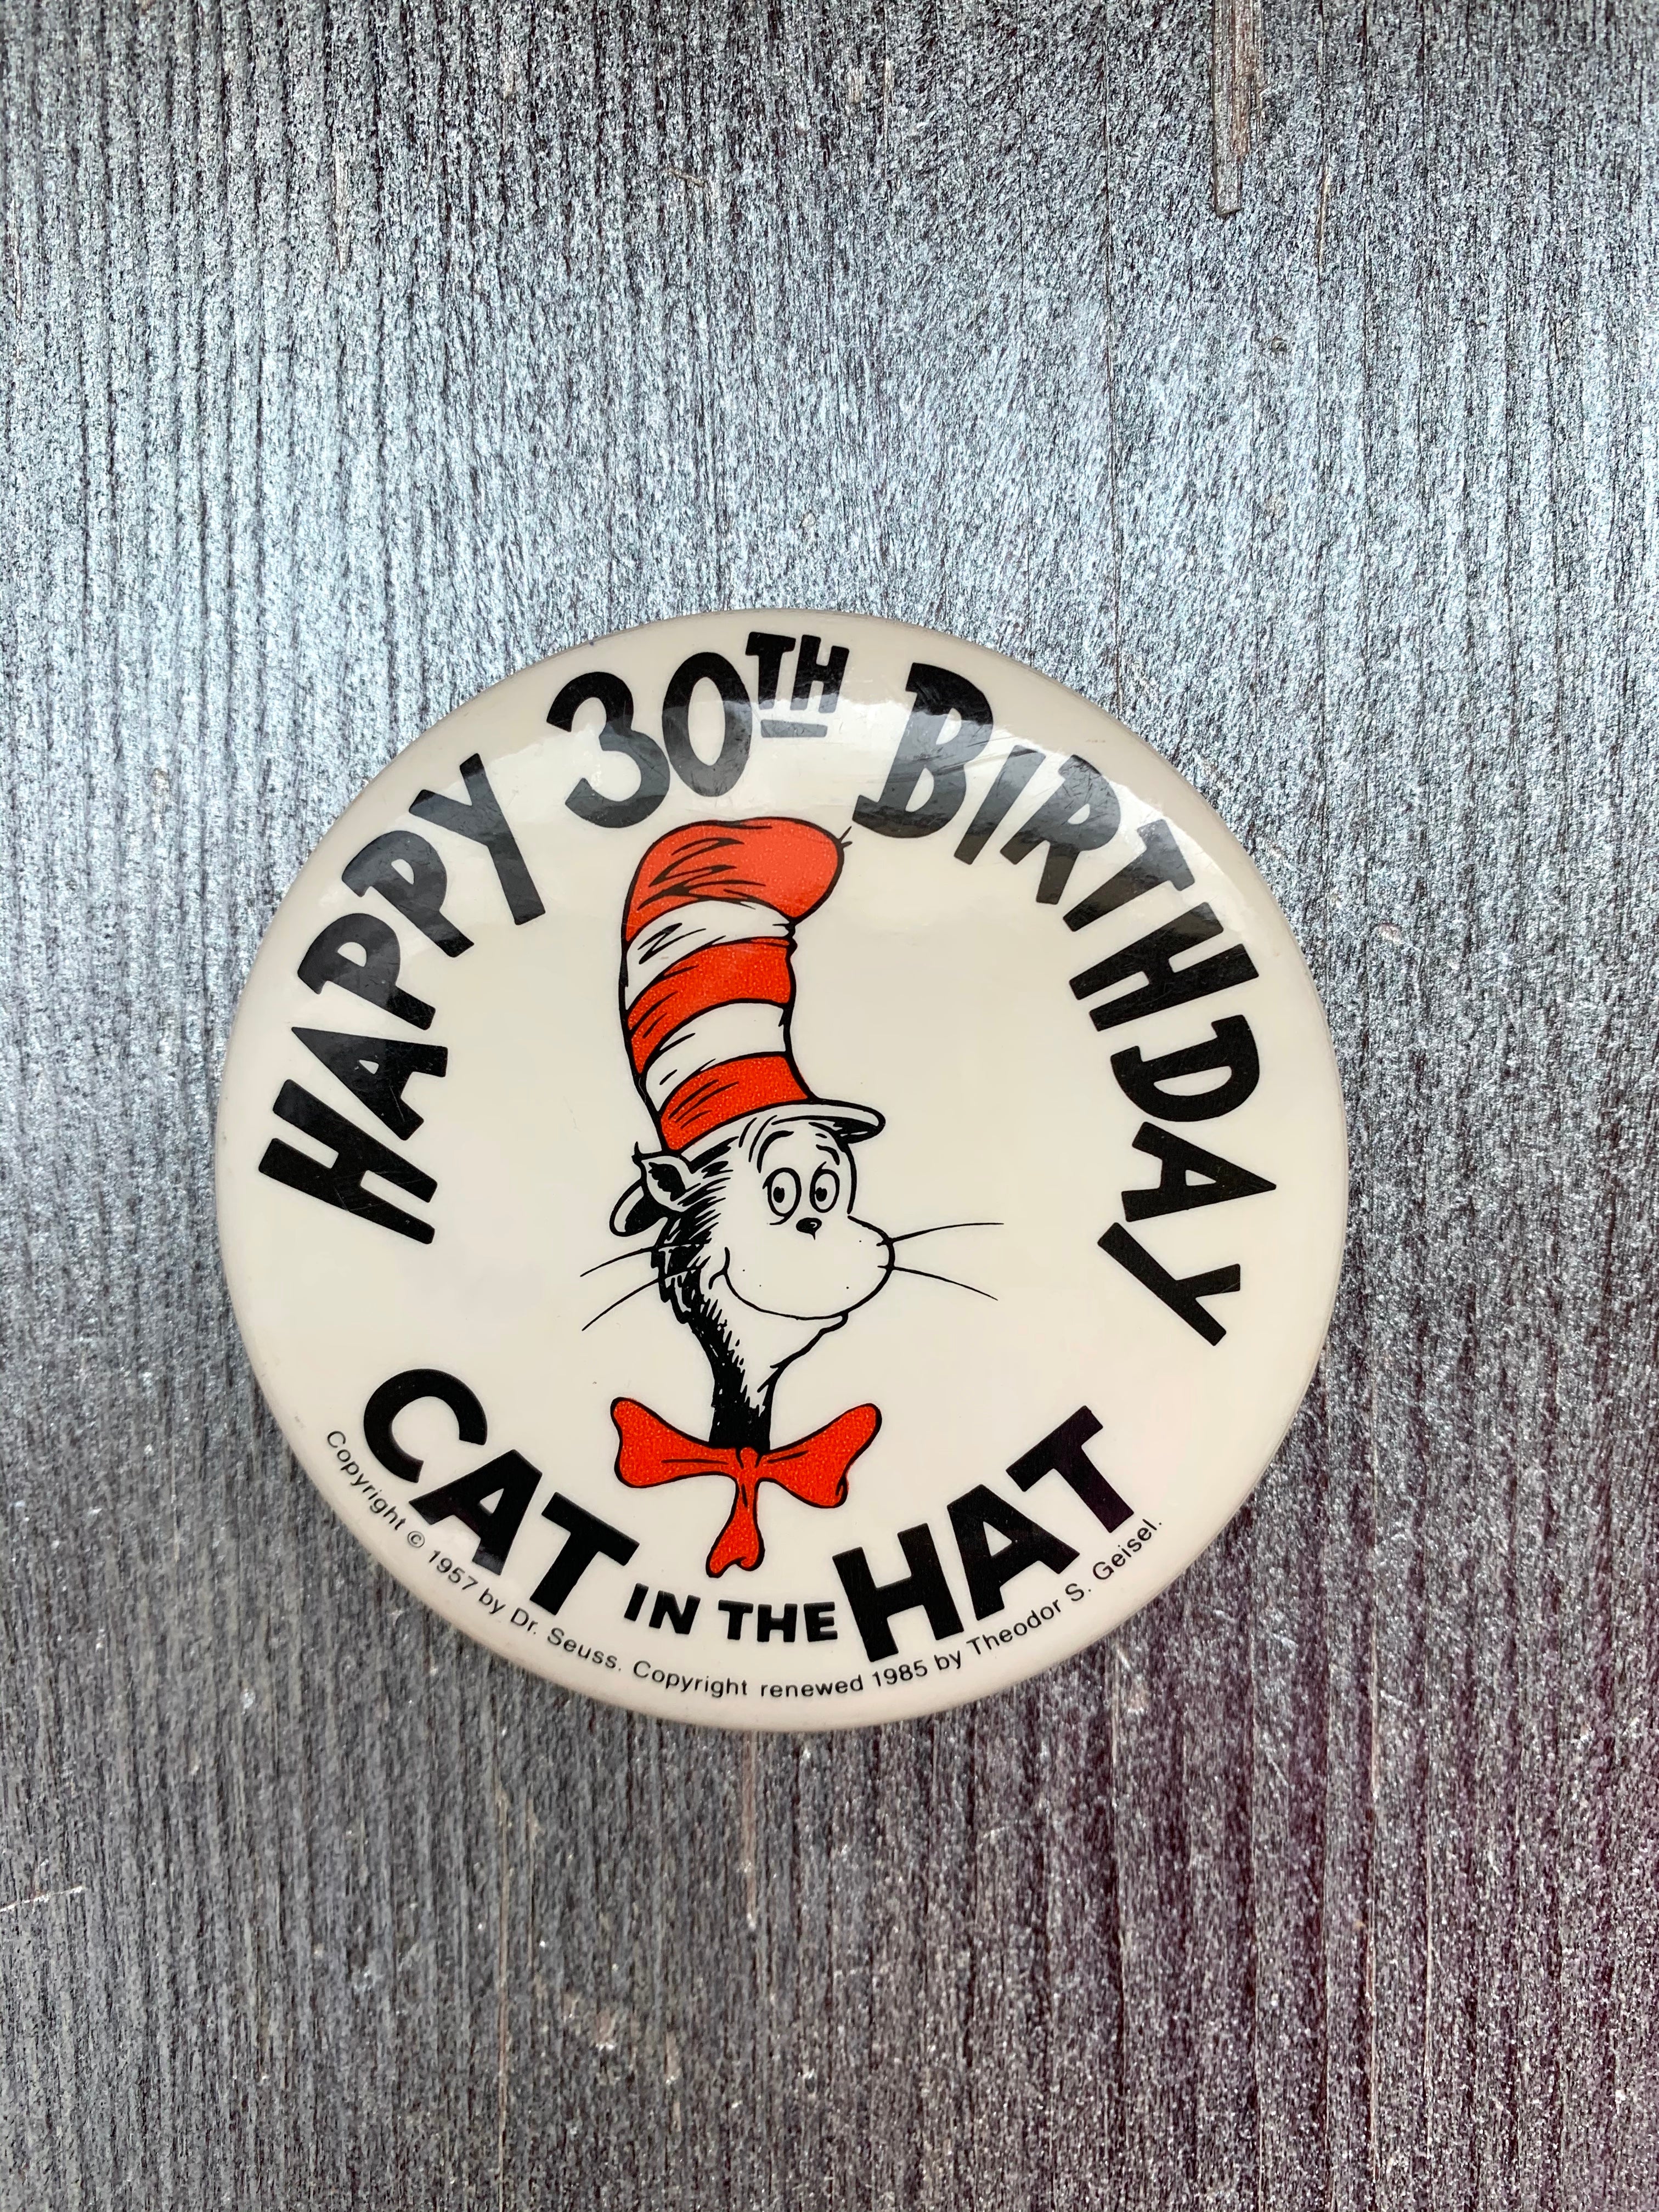 Happy 30th Birthday "Cat in the Hat" Collectible Memorabilia